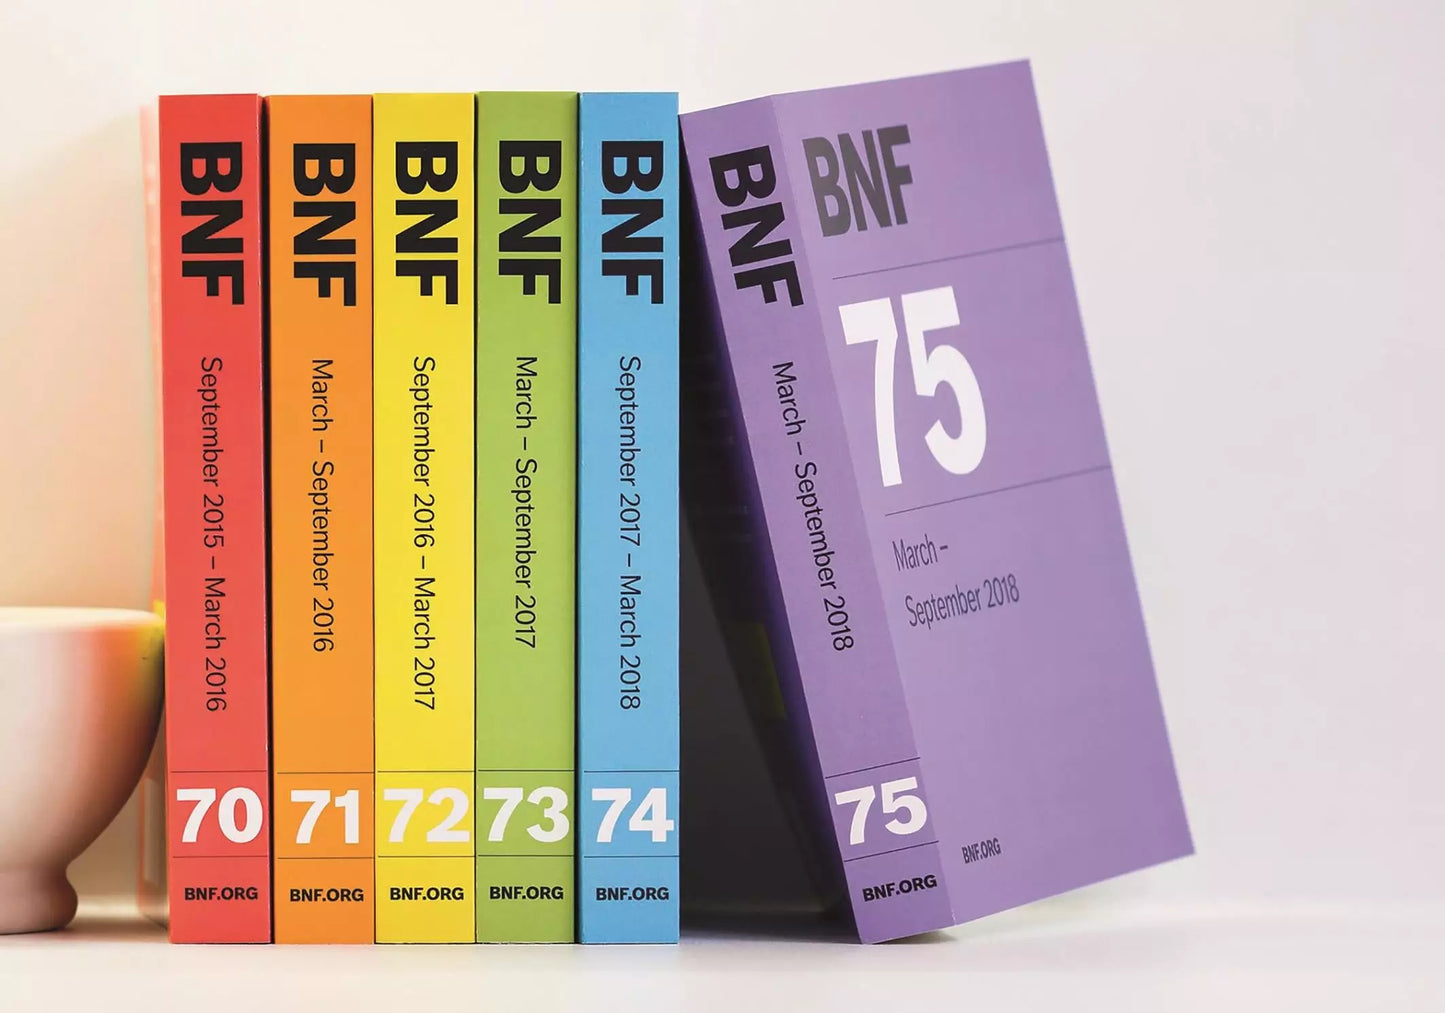 BNF (British National Formulary) Books, Children/Adult